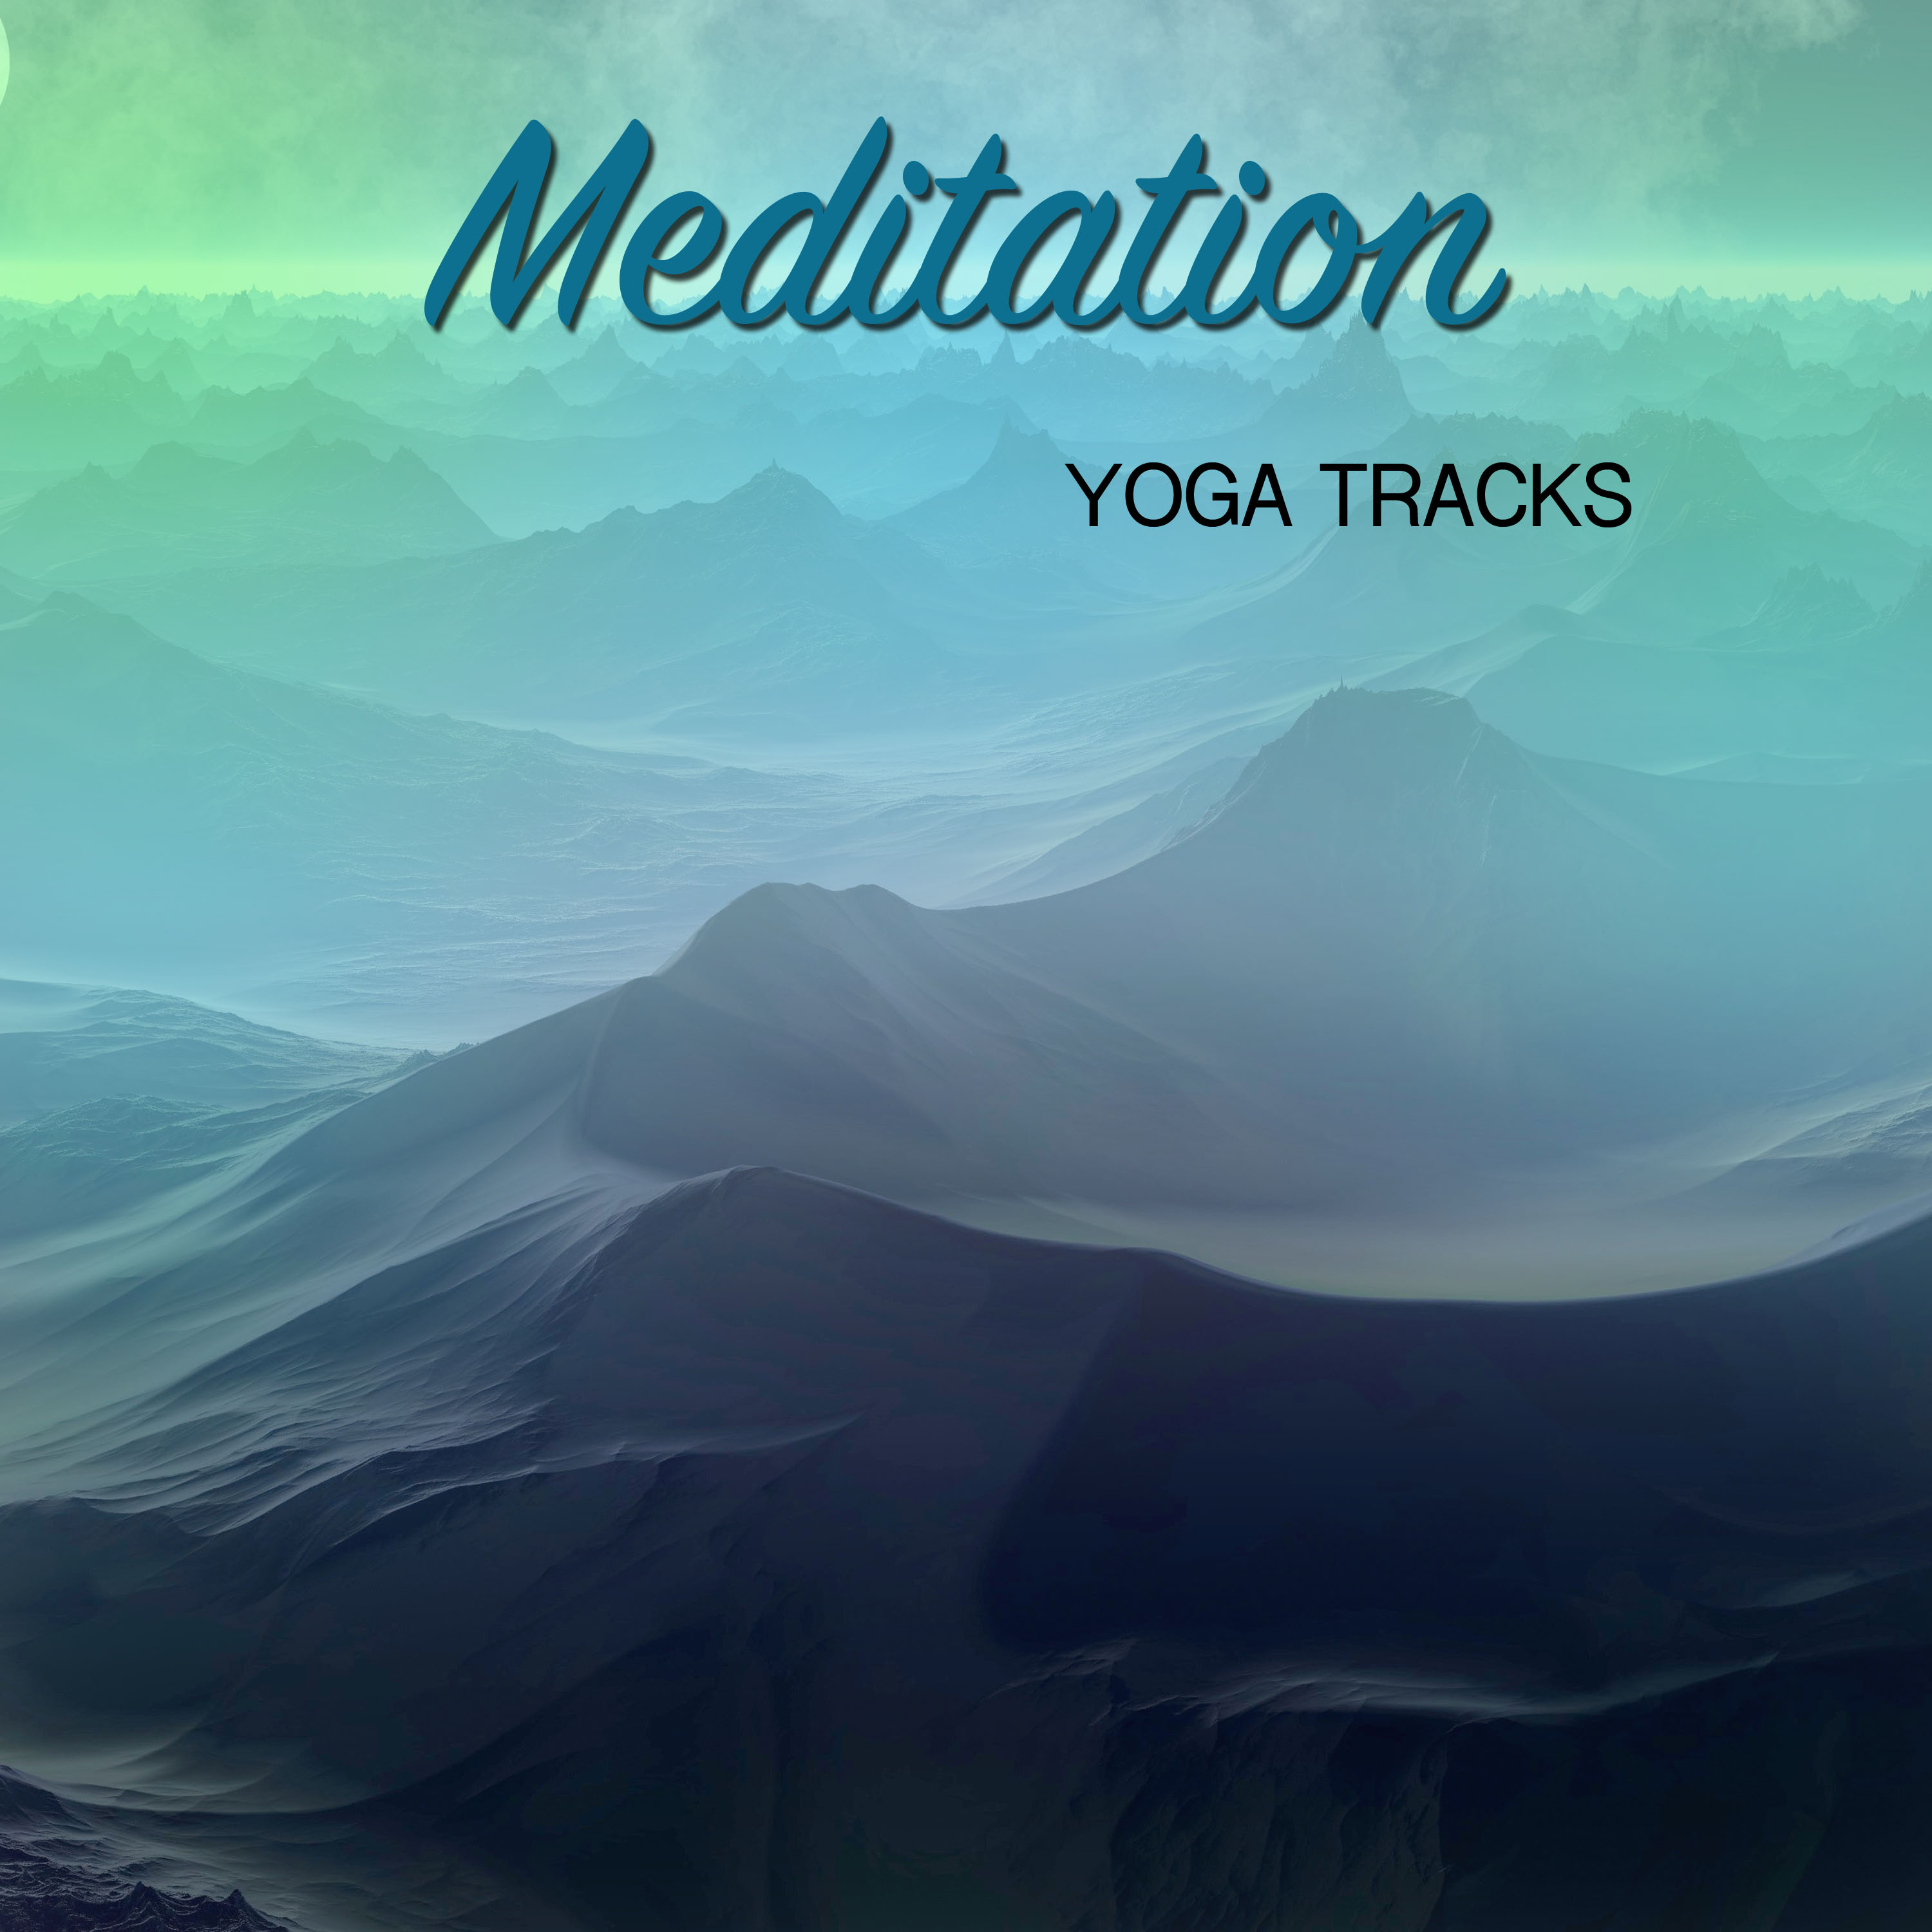 22 Relaxing Meditation and Yoga Tracks